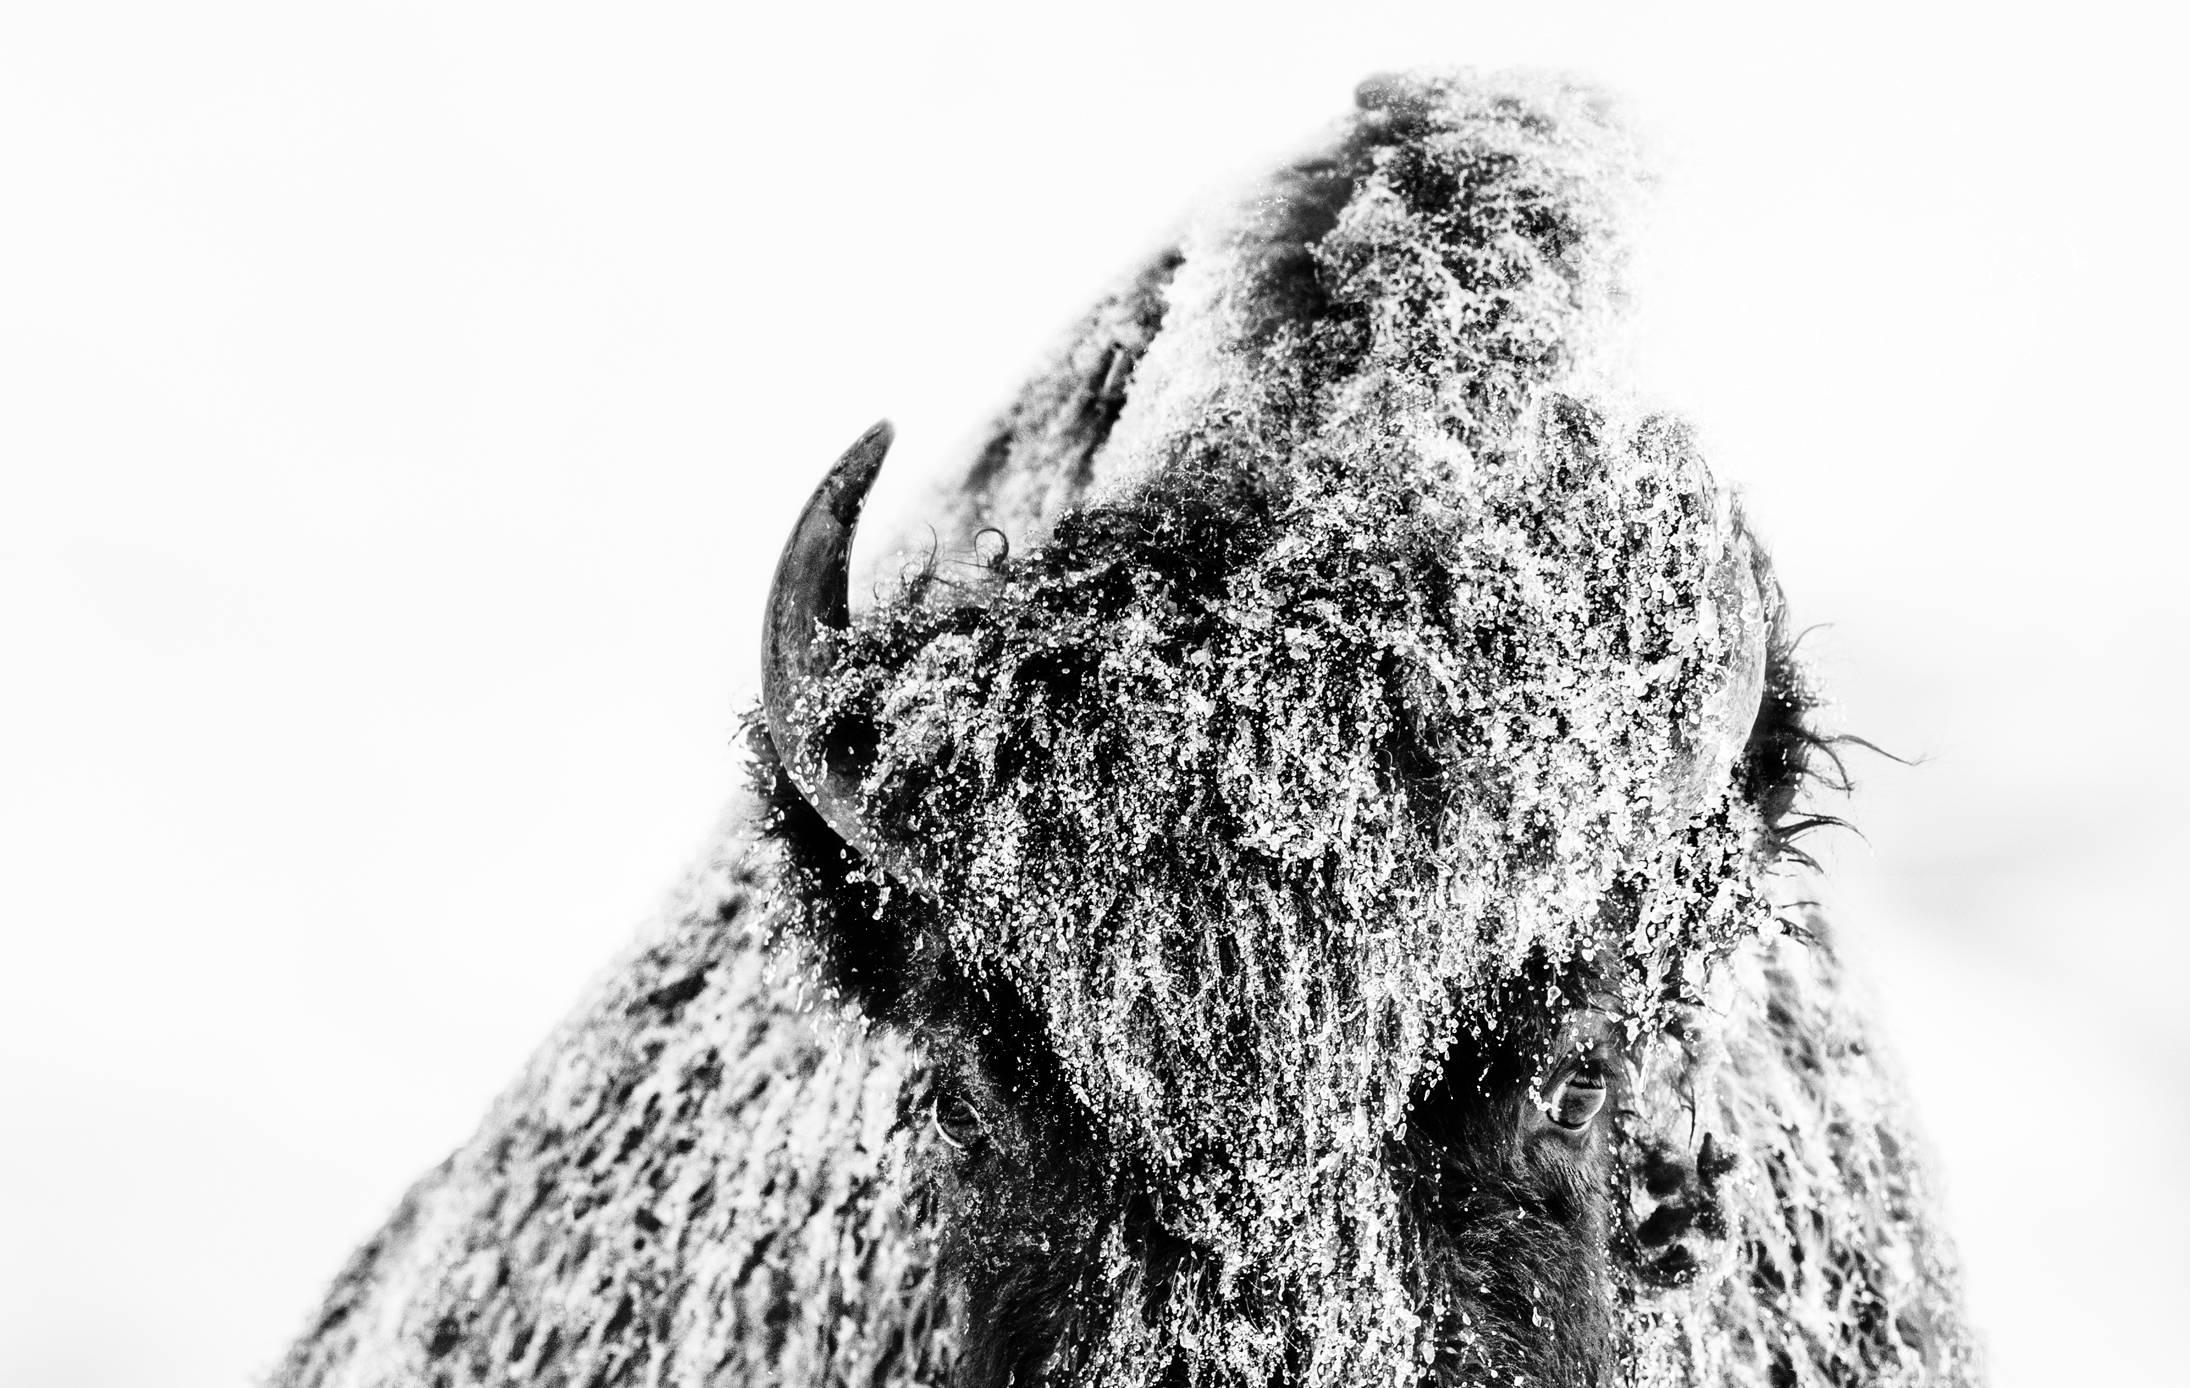 The Beast - Photograph by David Yarrow